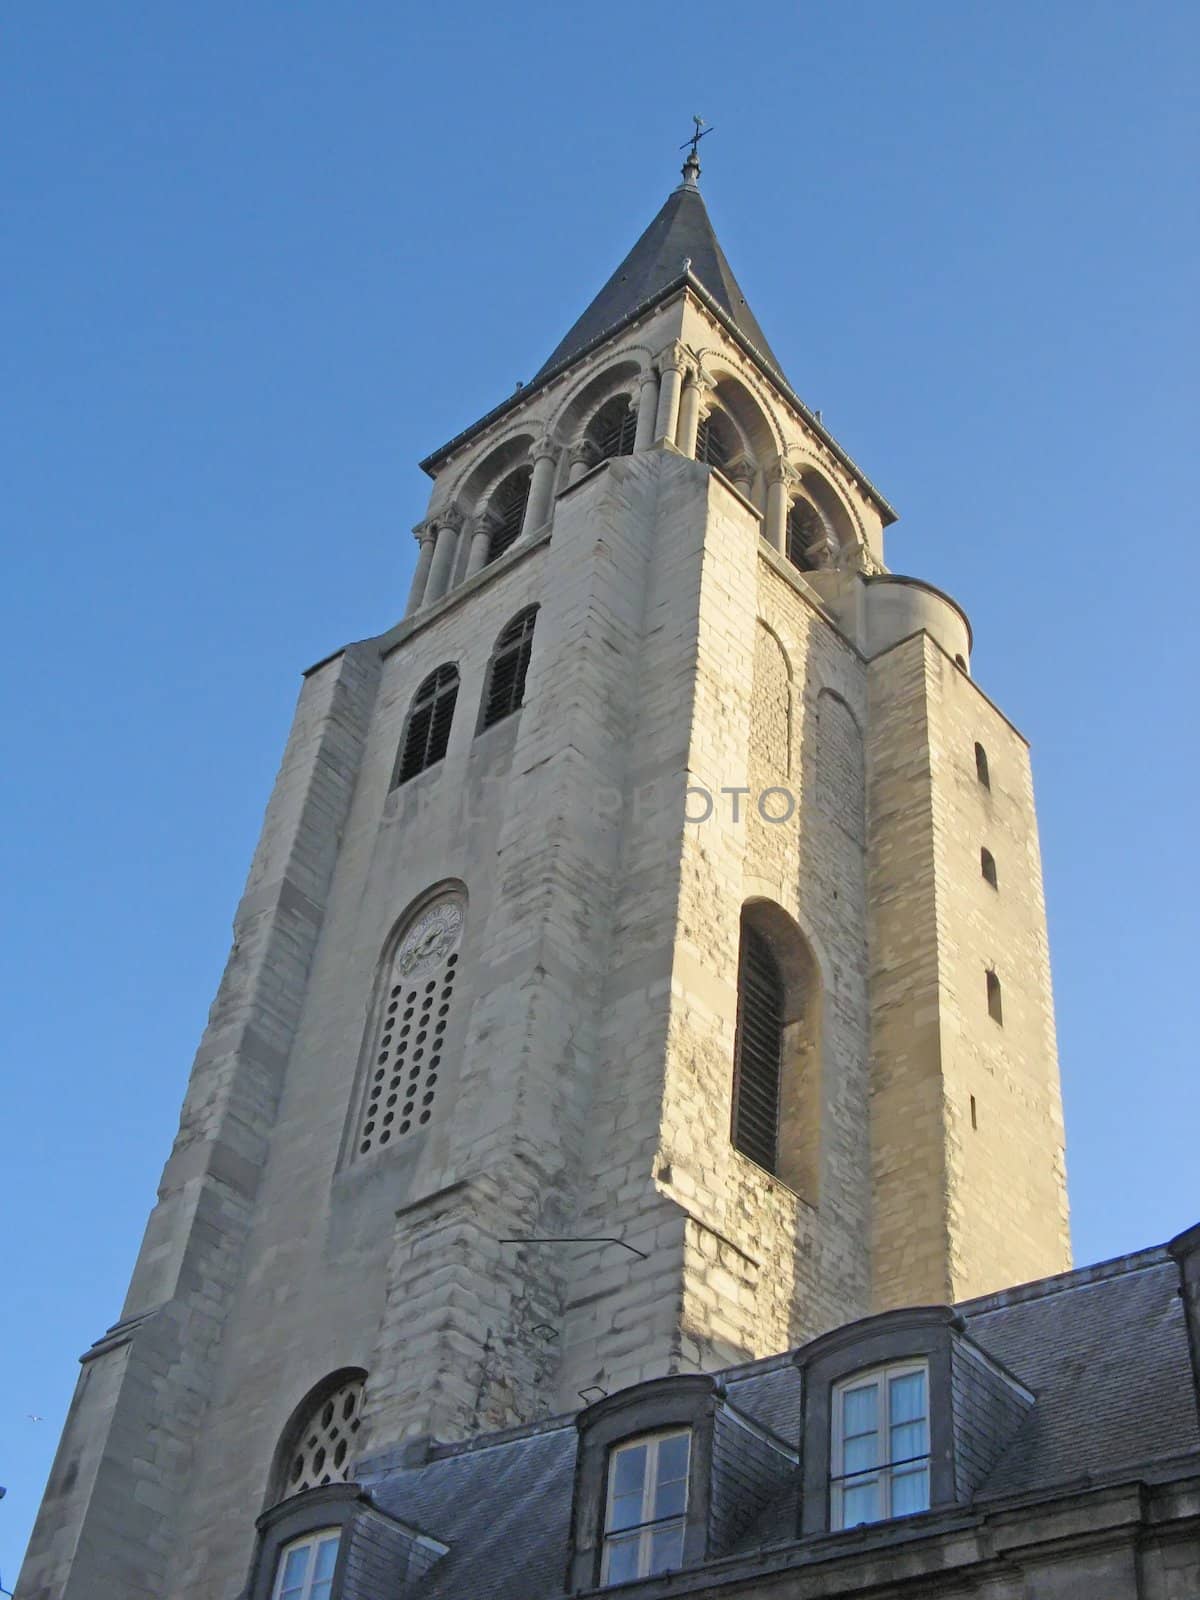 Bell tower of Saint-Germain-des-pres church in Patris